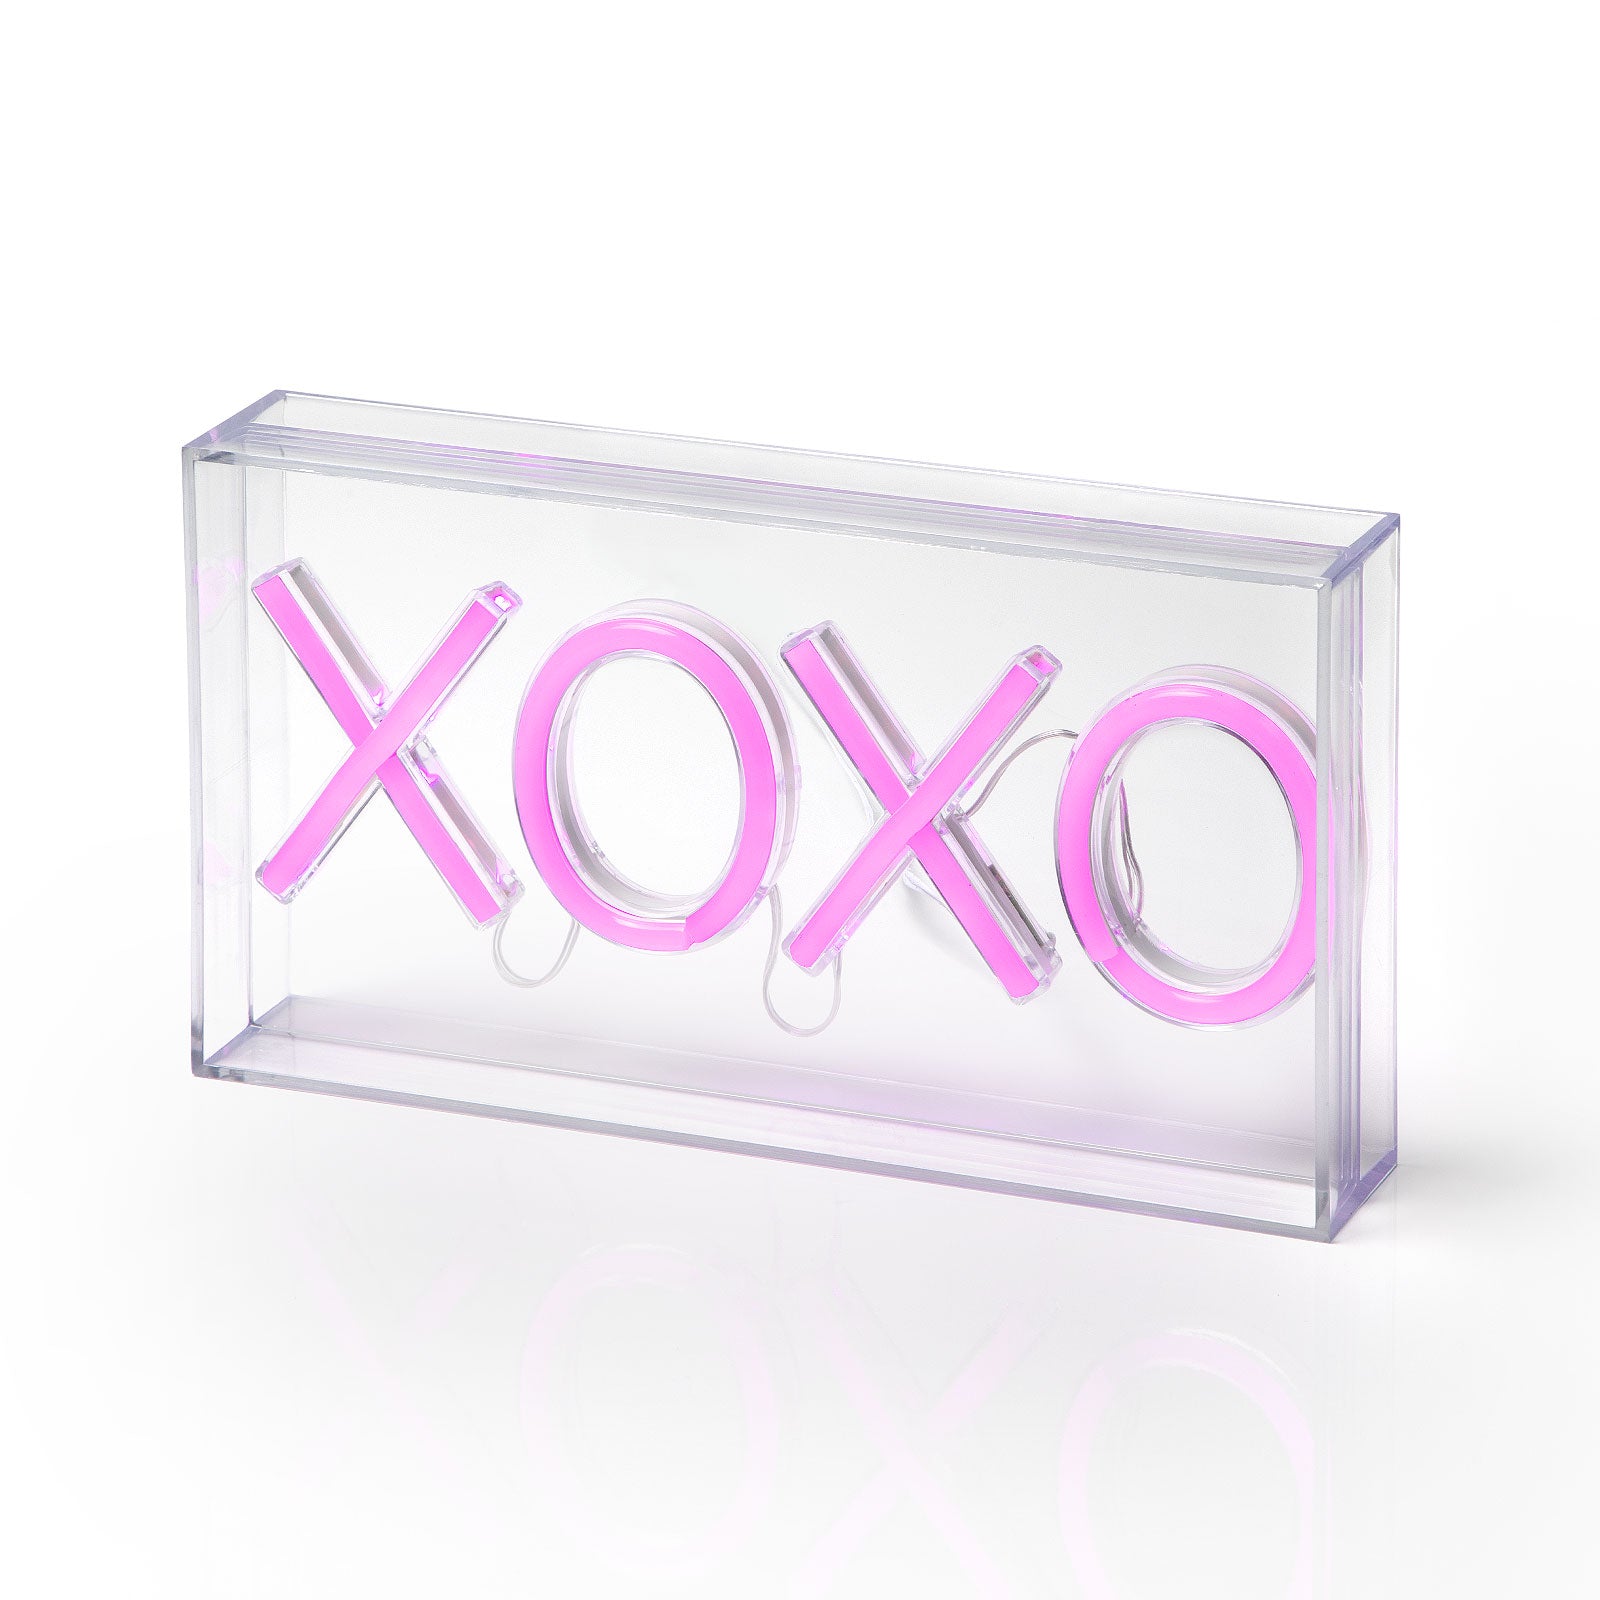 XOXO Acrylic Box LED Neon